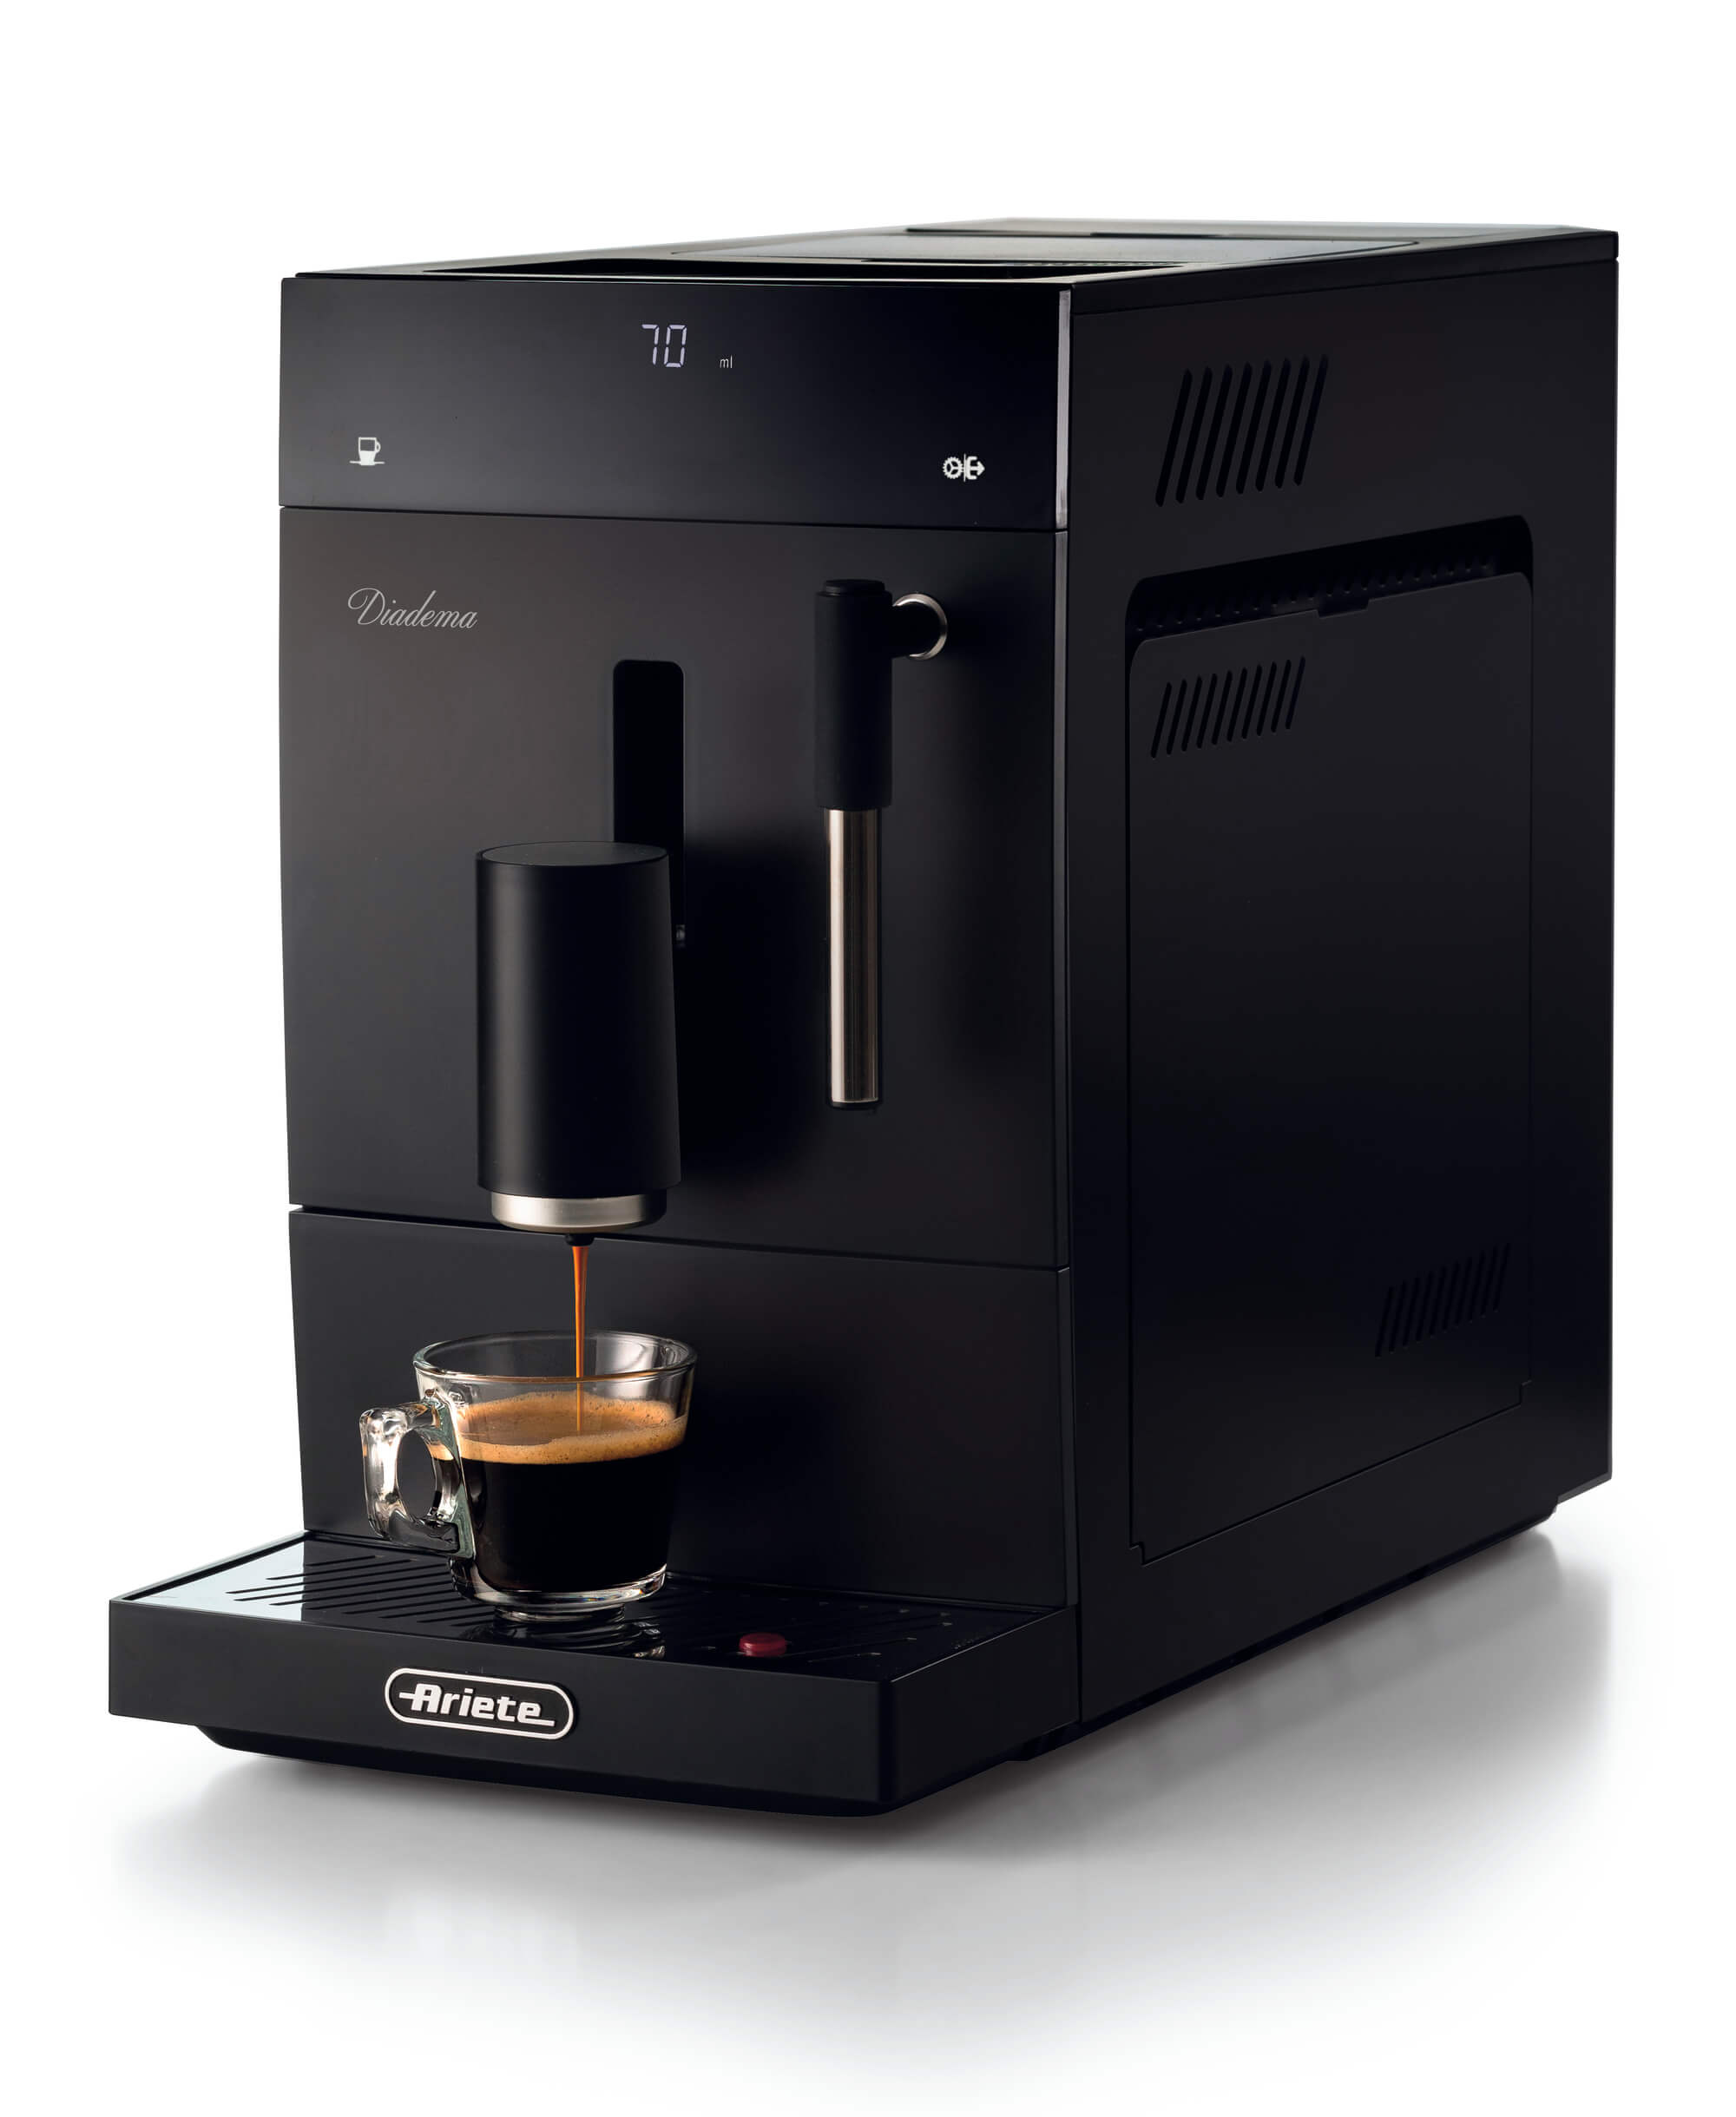 Immagine di  Ariete 1452 Diadema, Macchina da caffè automatica, 1350W, 19 bar di pressione, Per caffè, americano e acqua calda, Dispositivo Cappuccino, Display LED, Erogatore Regolabile, Nera